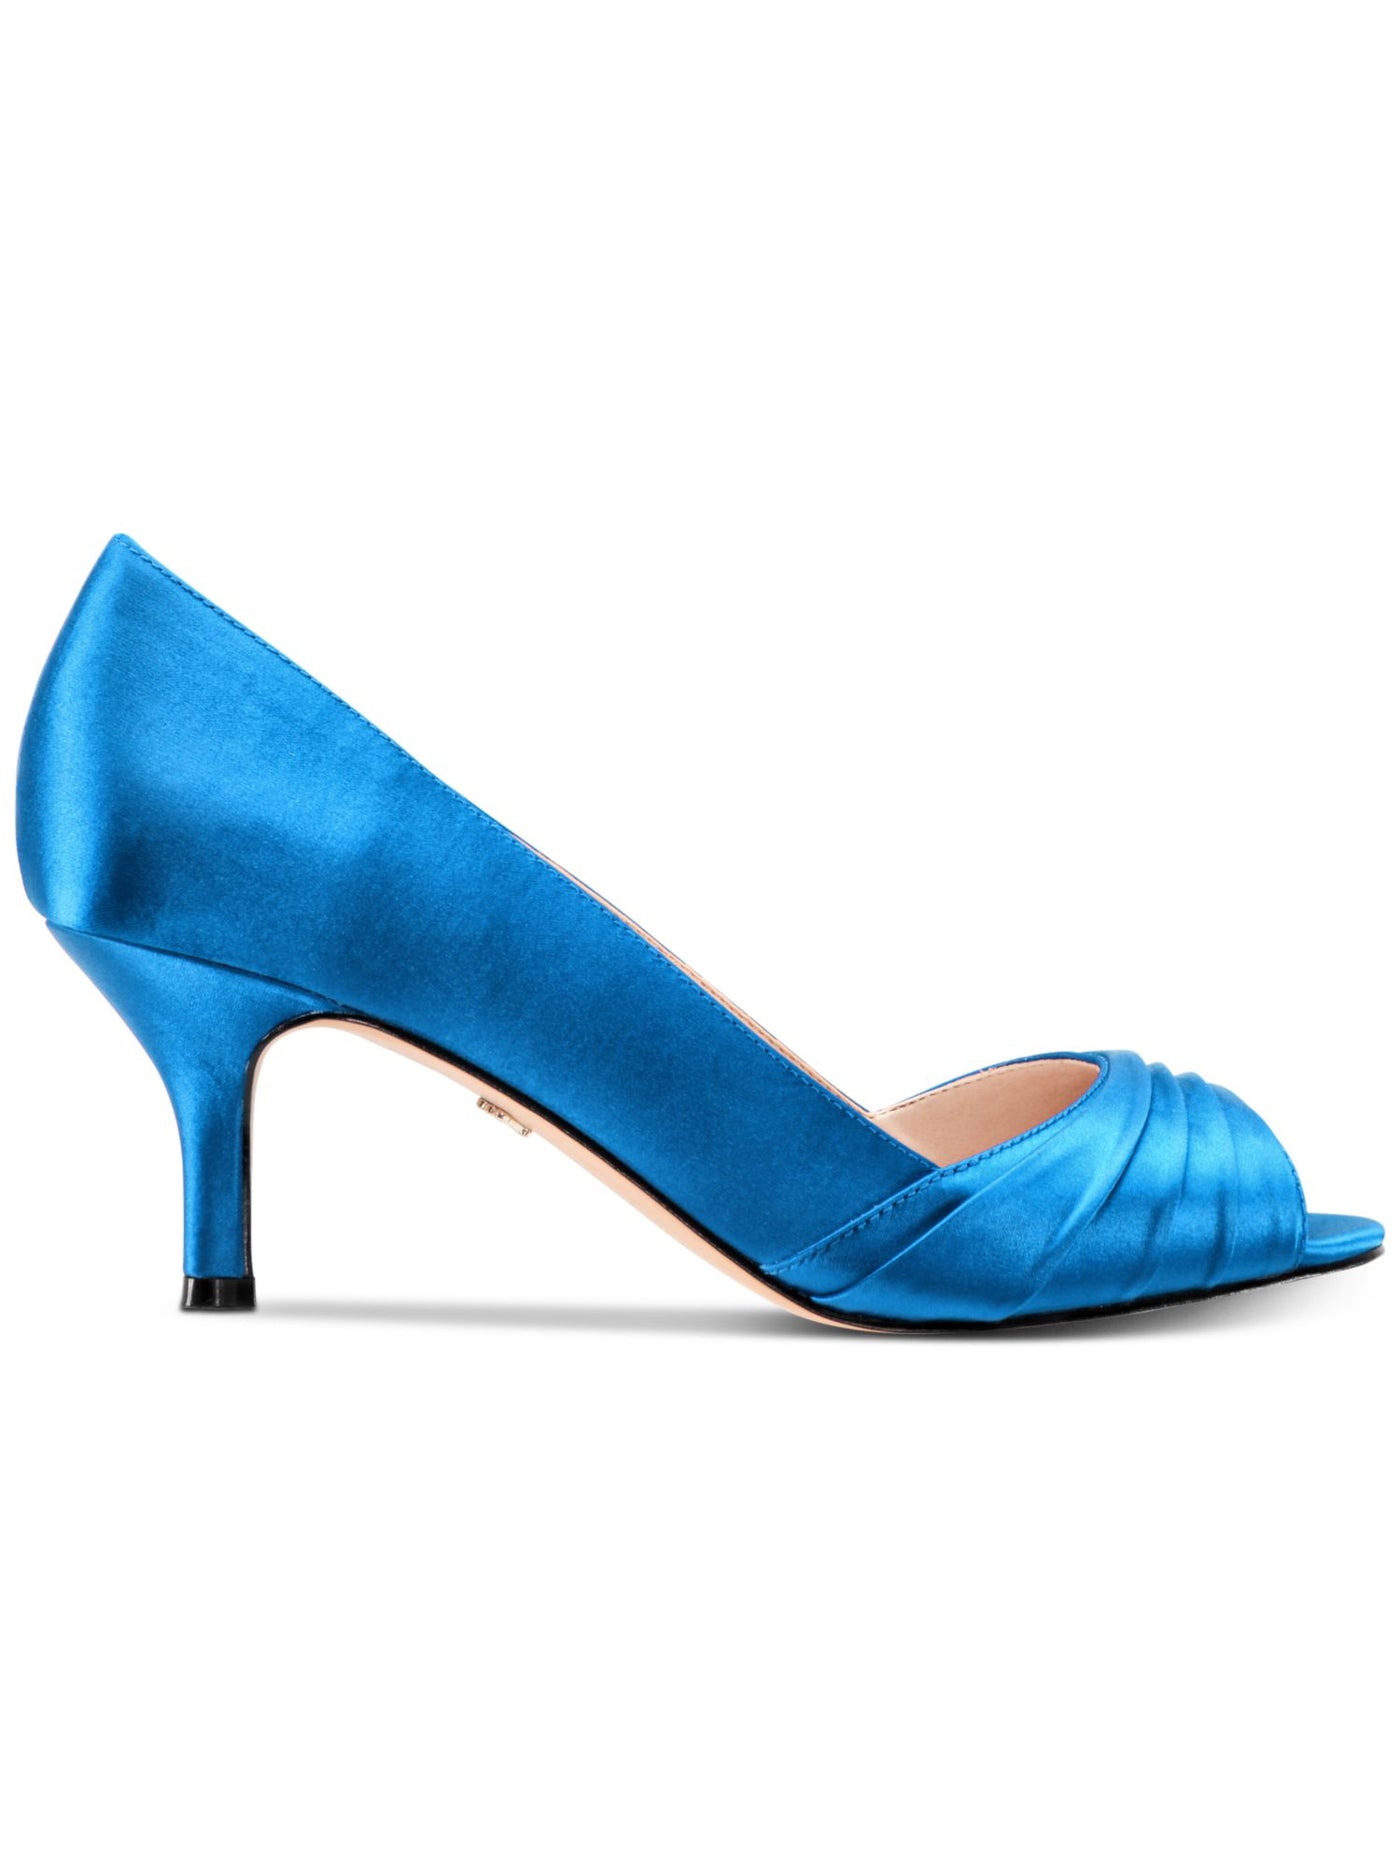 NINA Womens Blue Cushioned Pleated Chezare Round Toe Kitten Heel Slip On Leather Pumps Shoes 6.5 W